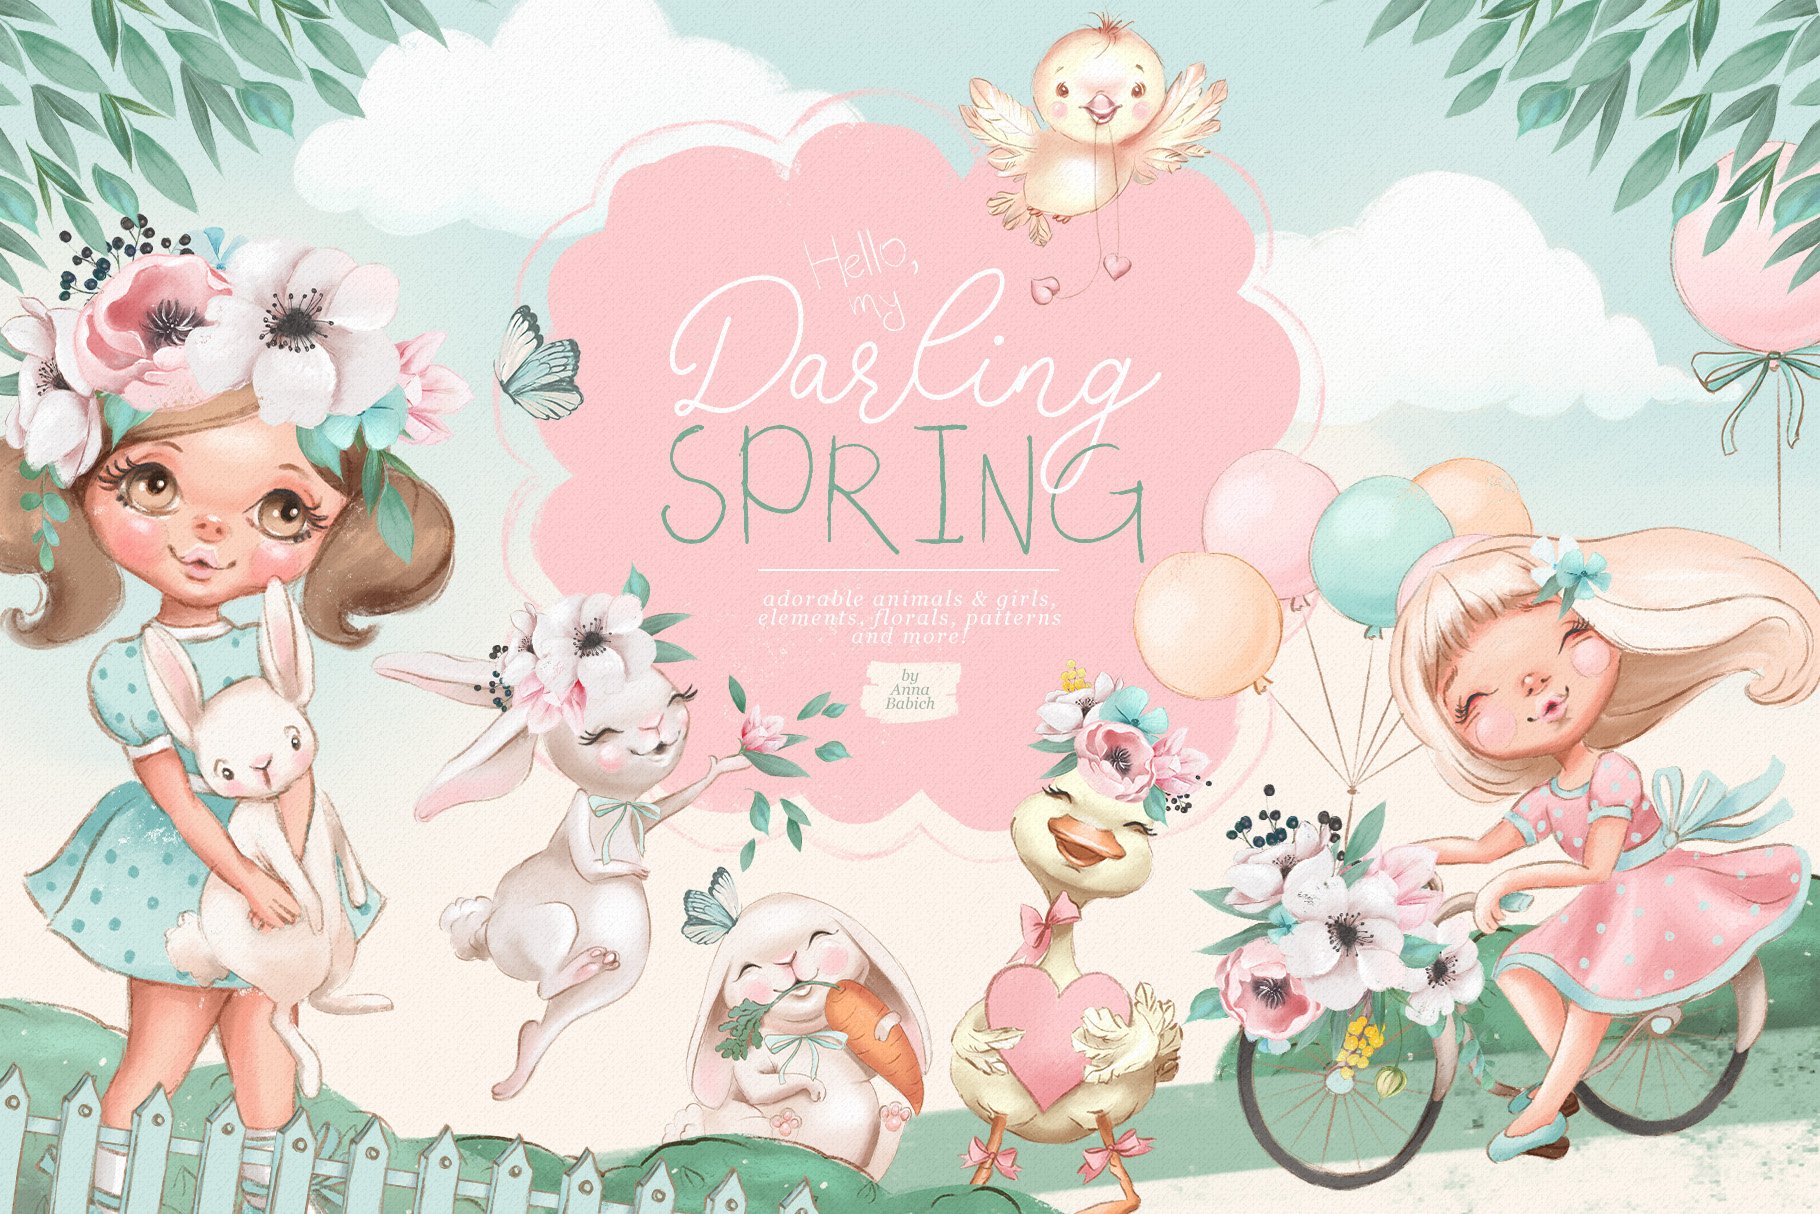 Darling Spring